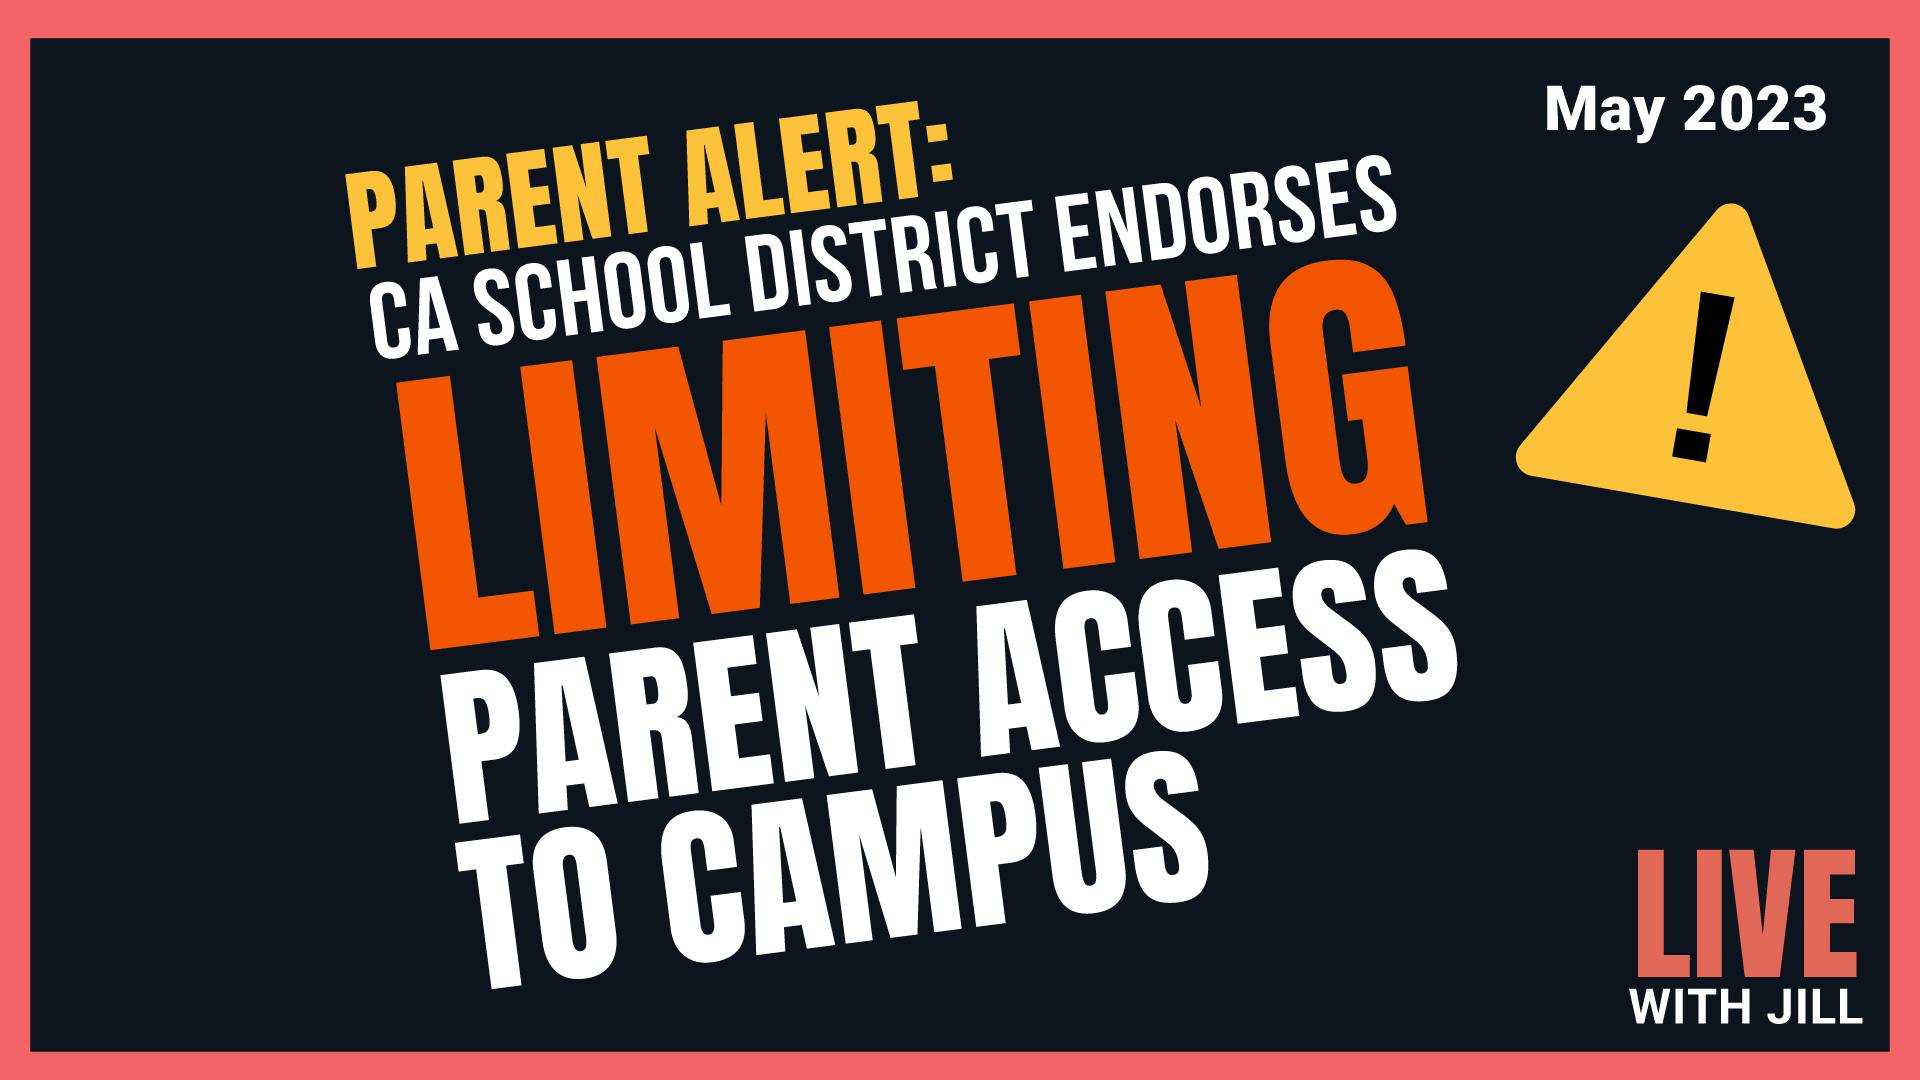 Parent Alert: CA School District Endorses Limiting Parent Access to Campus!